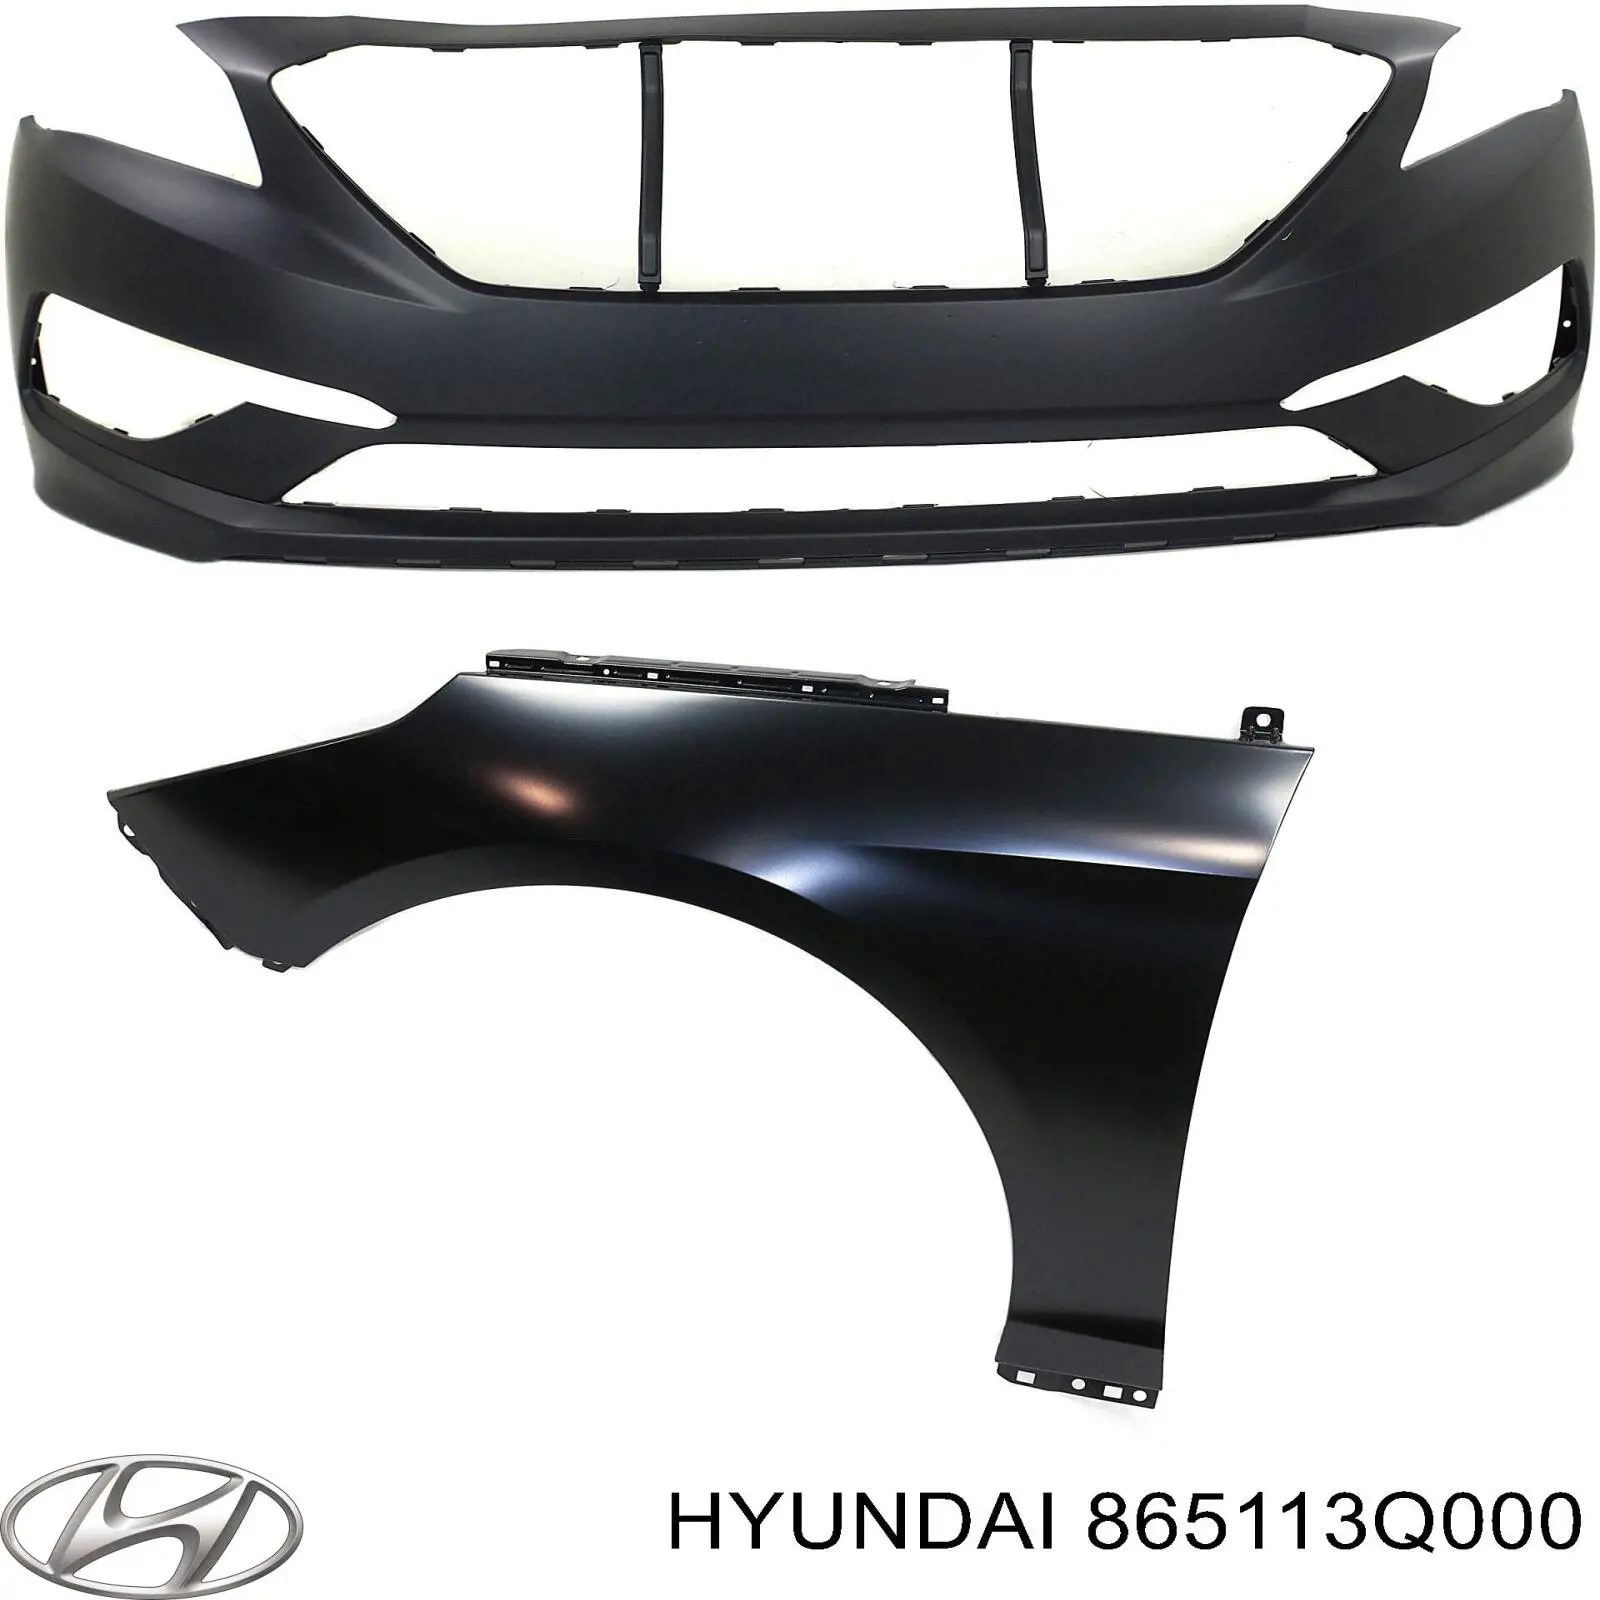 Parachoques delantero Hyundai Sonata YF